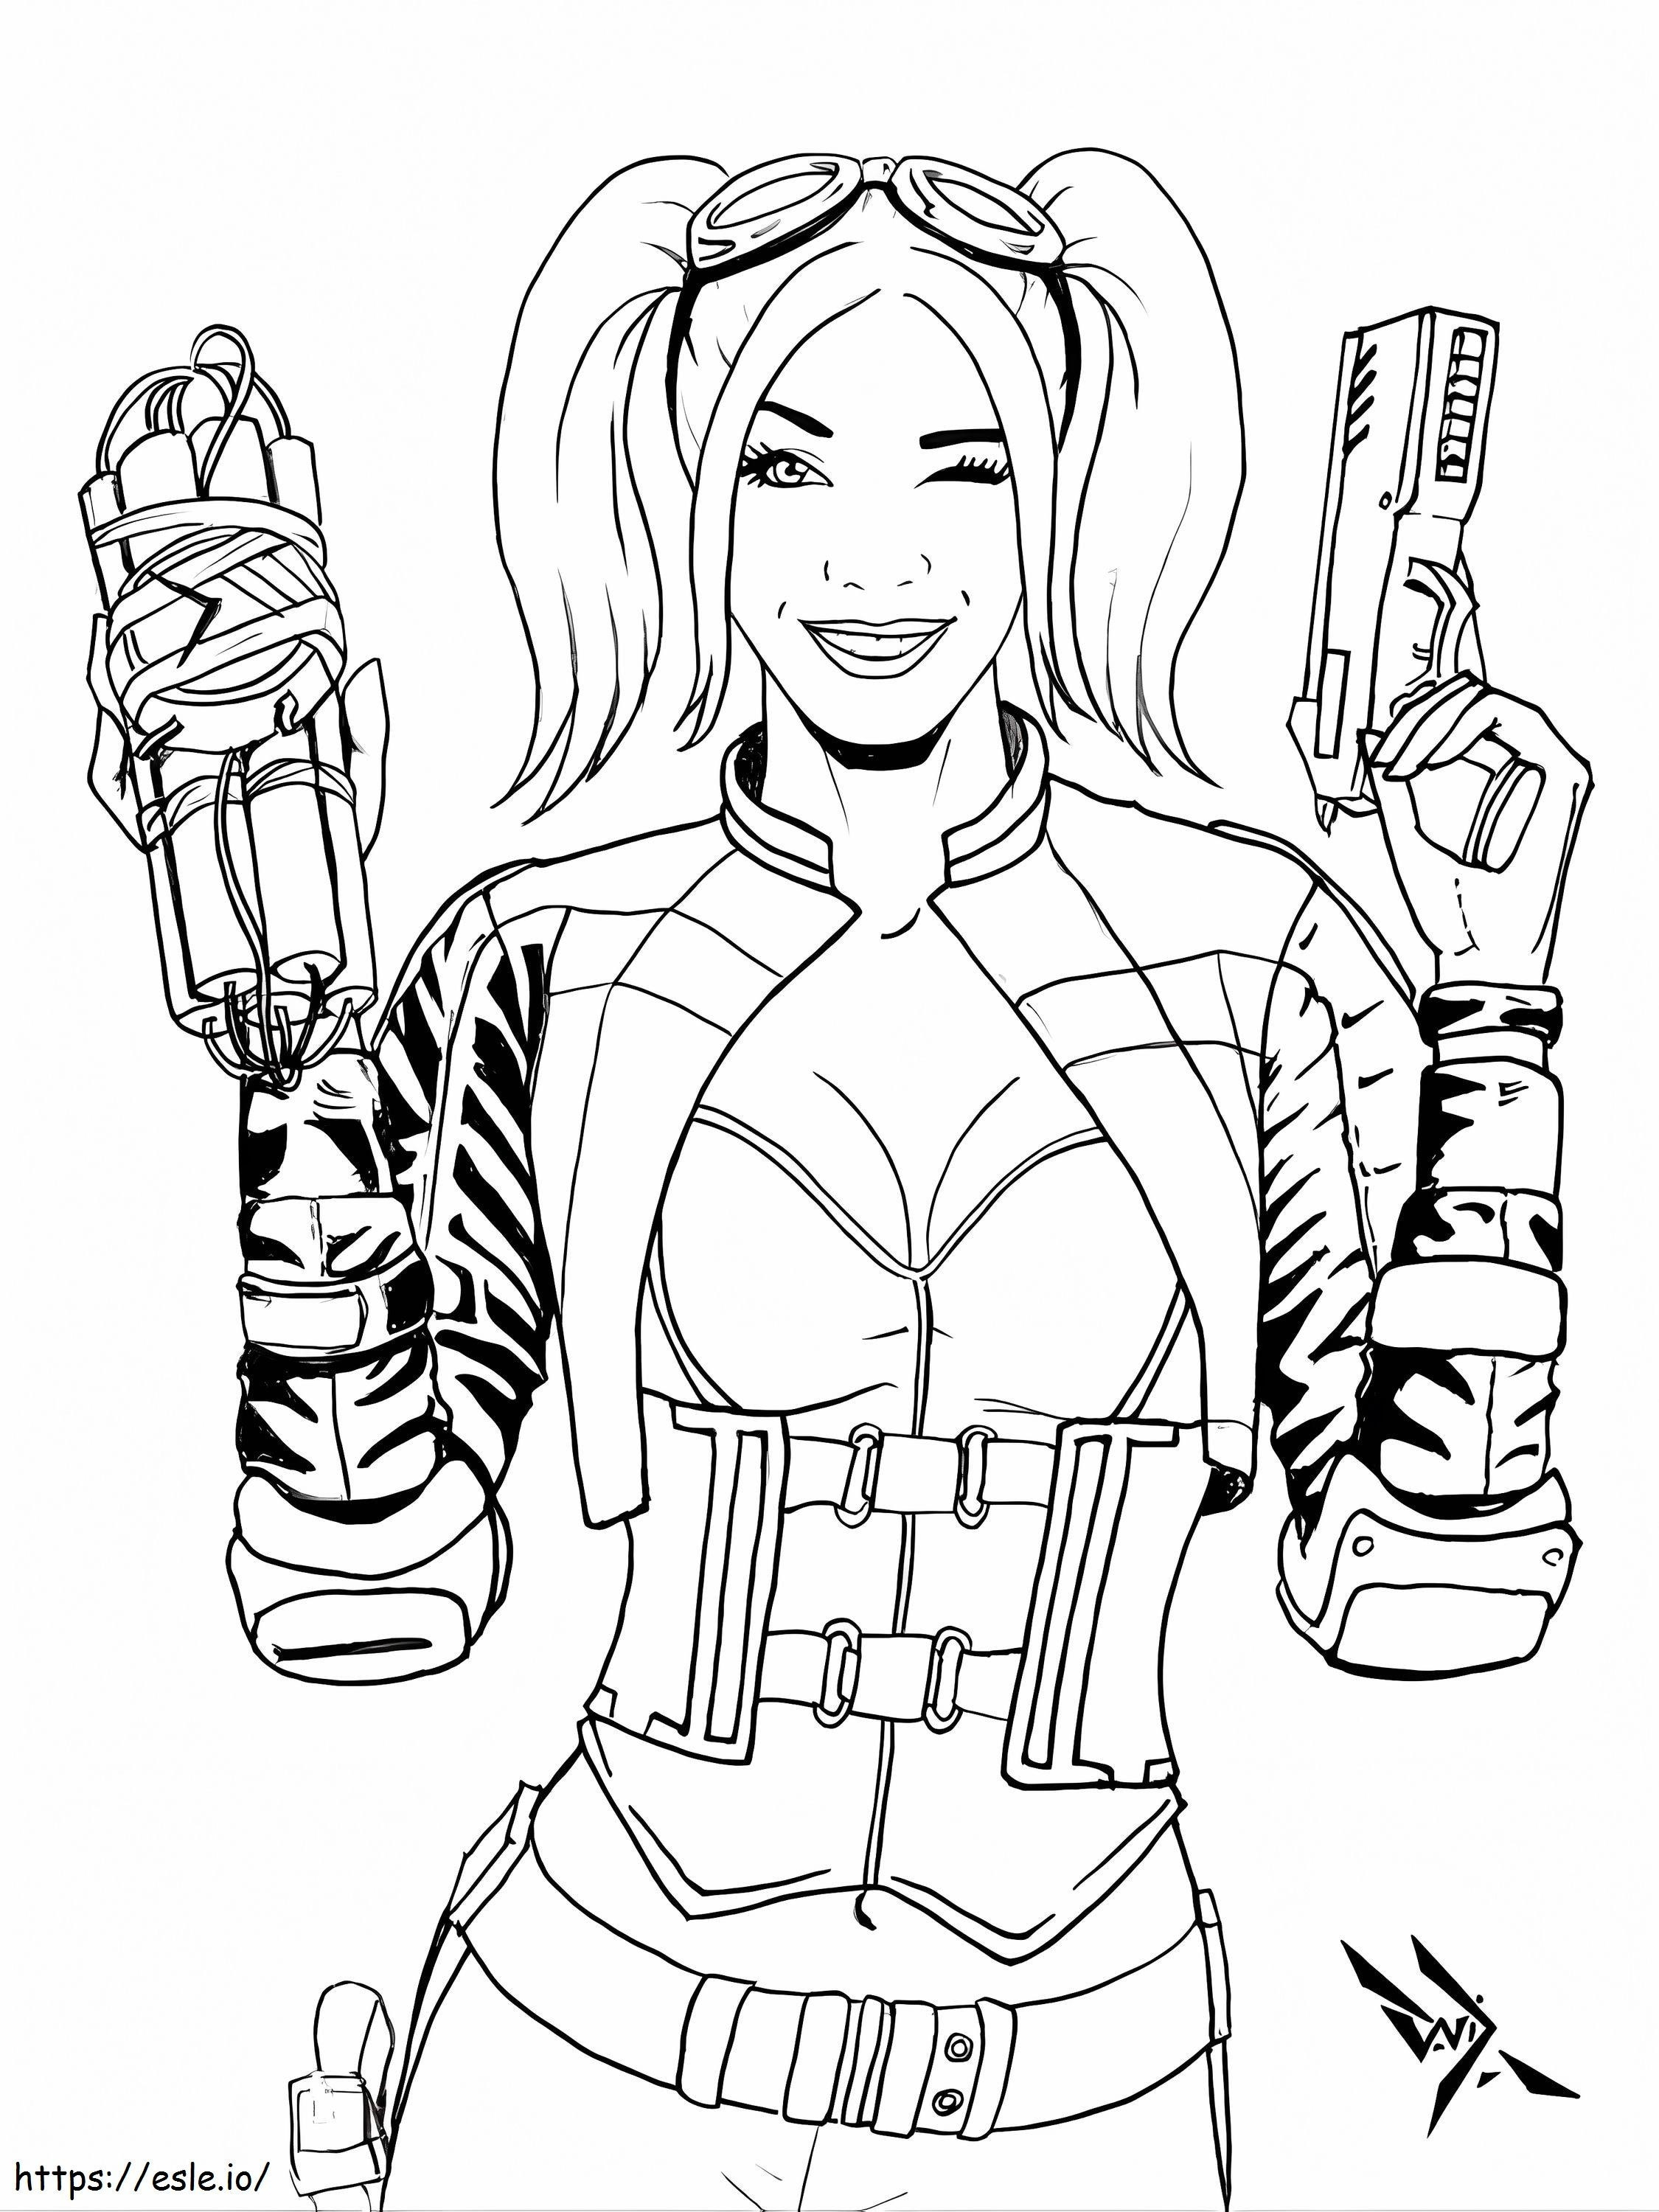 Harley Quinn z dwoma pistoletami kolorowanka